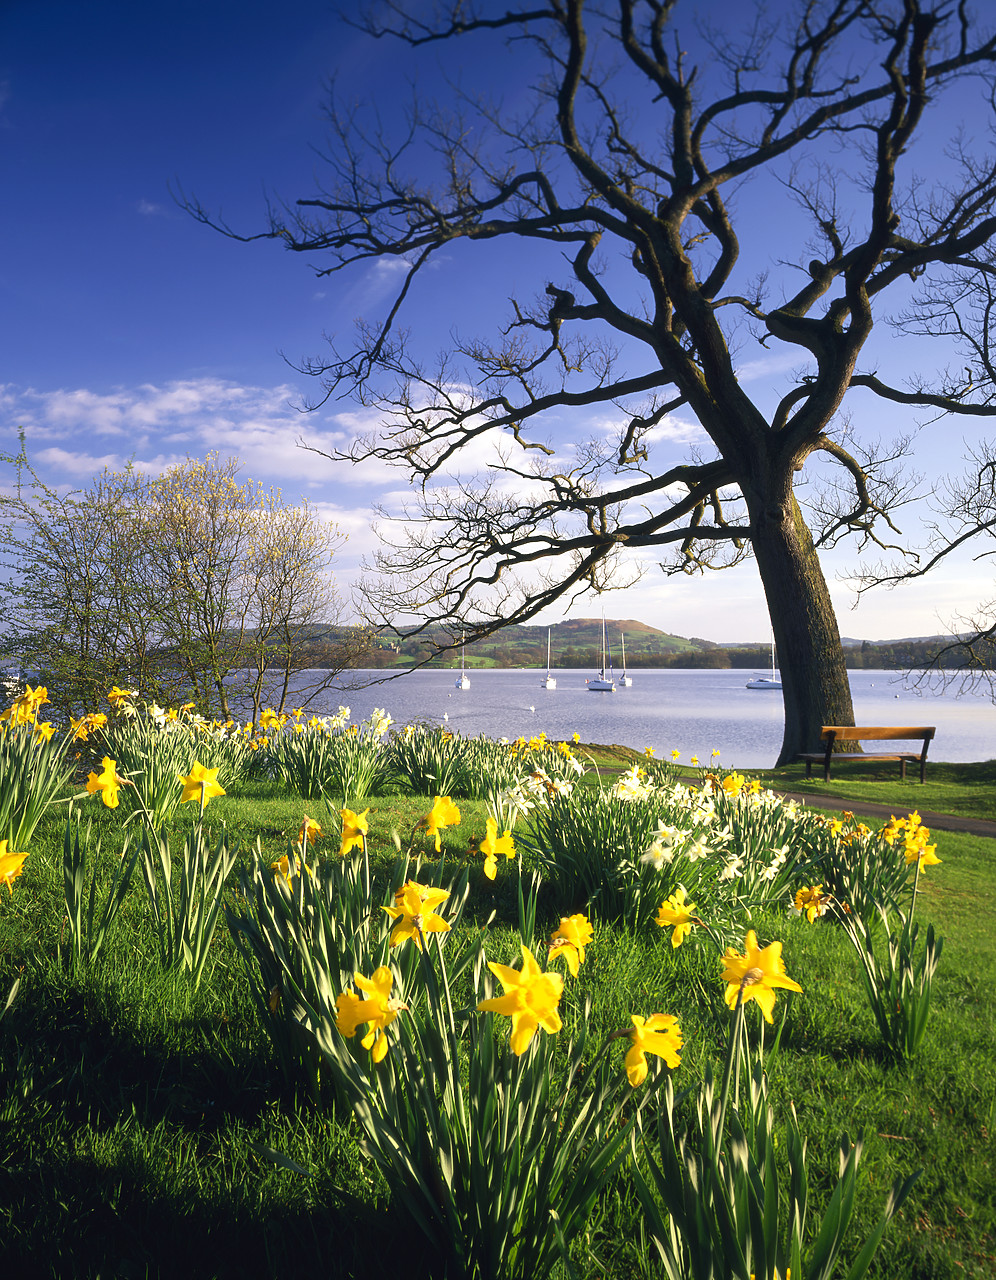 #970206-4 - Daffodils at Waterhead, Lake Windermere, Cumbria, England